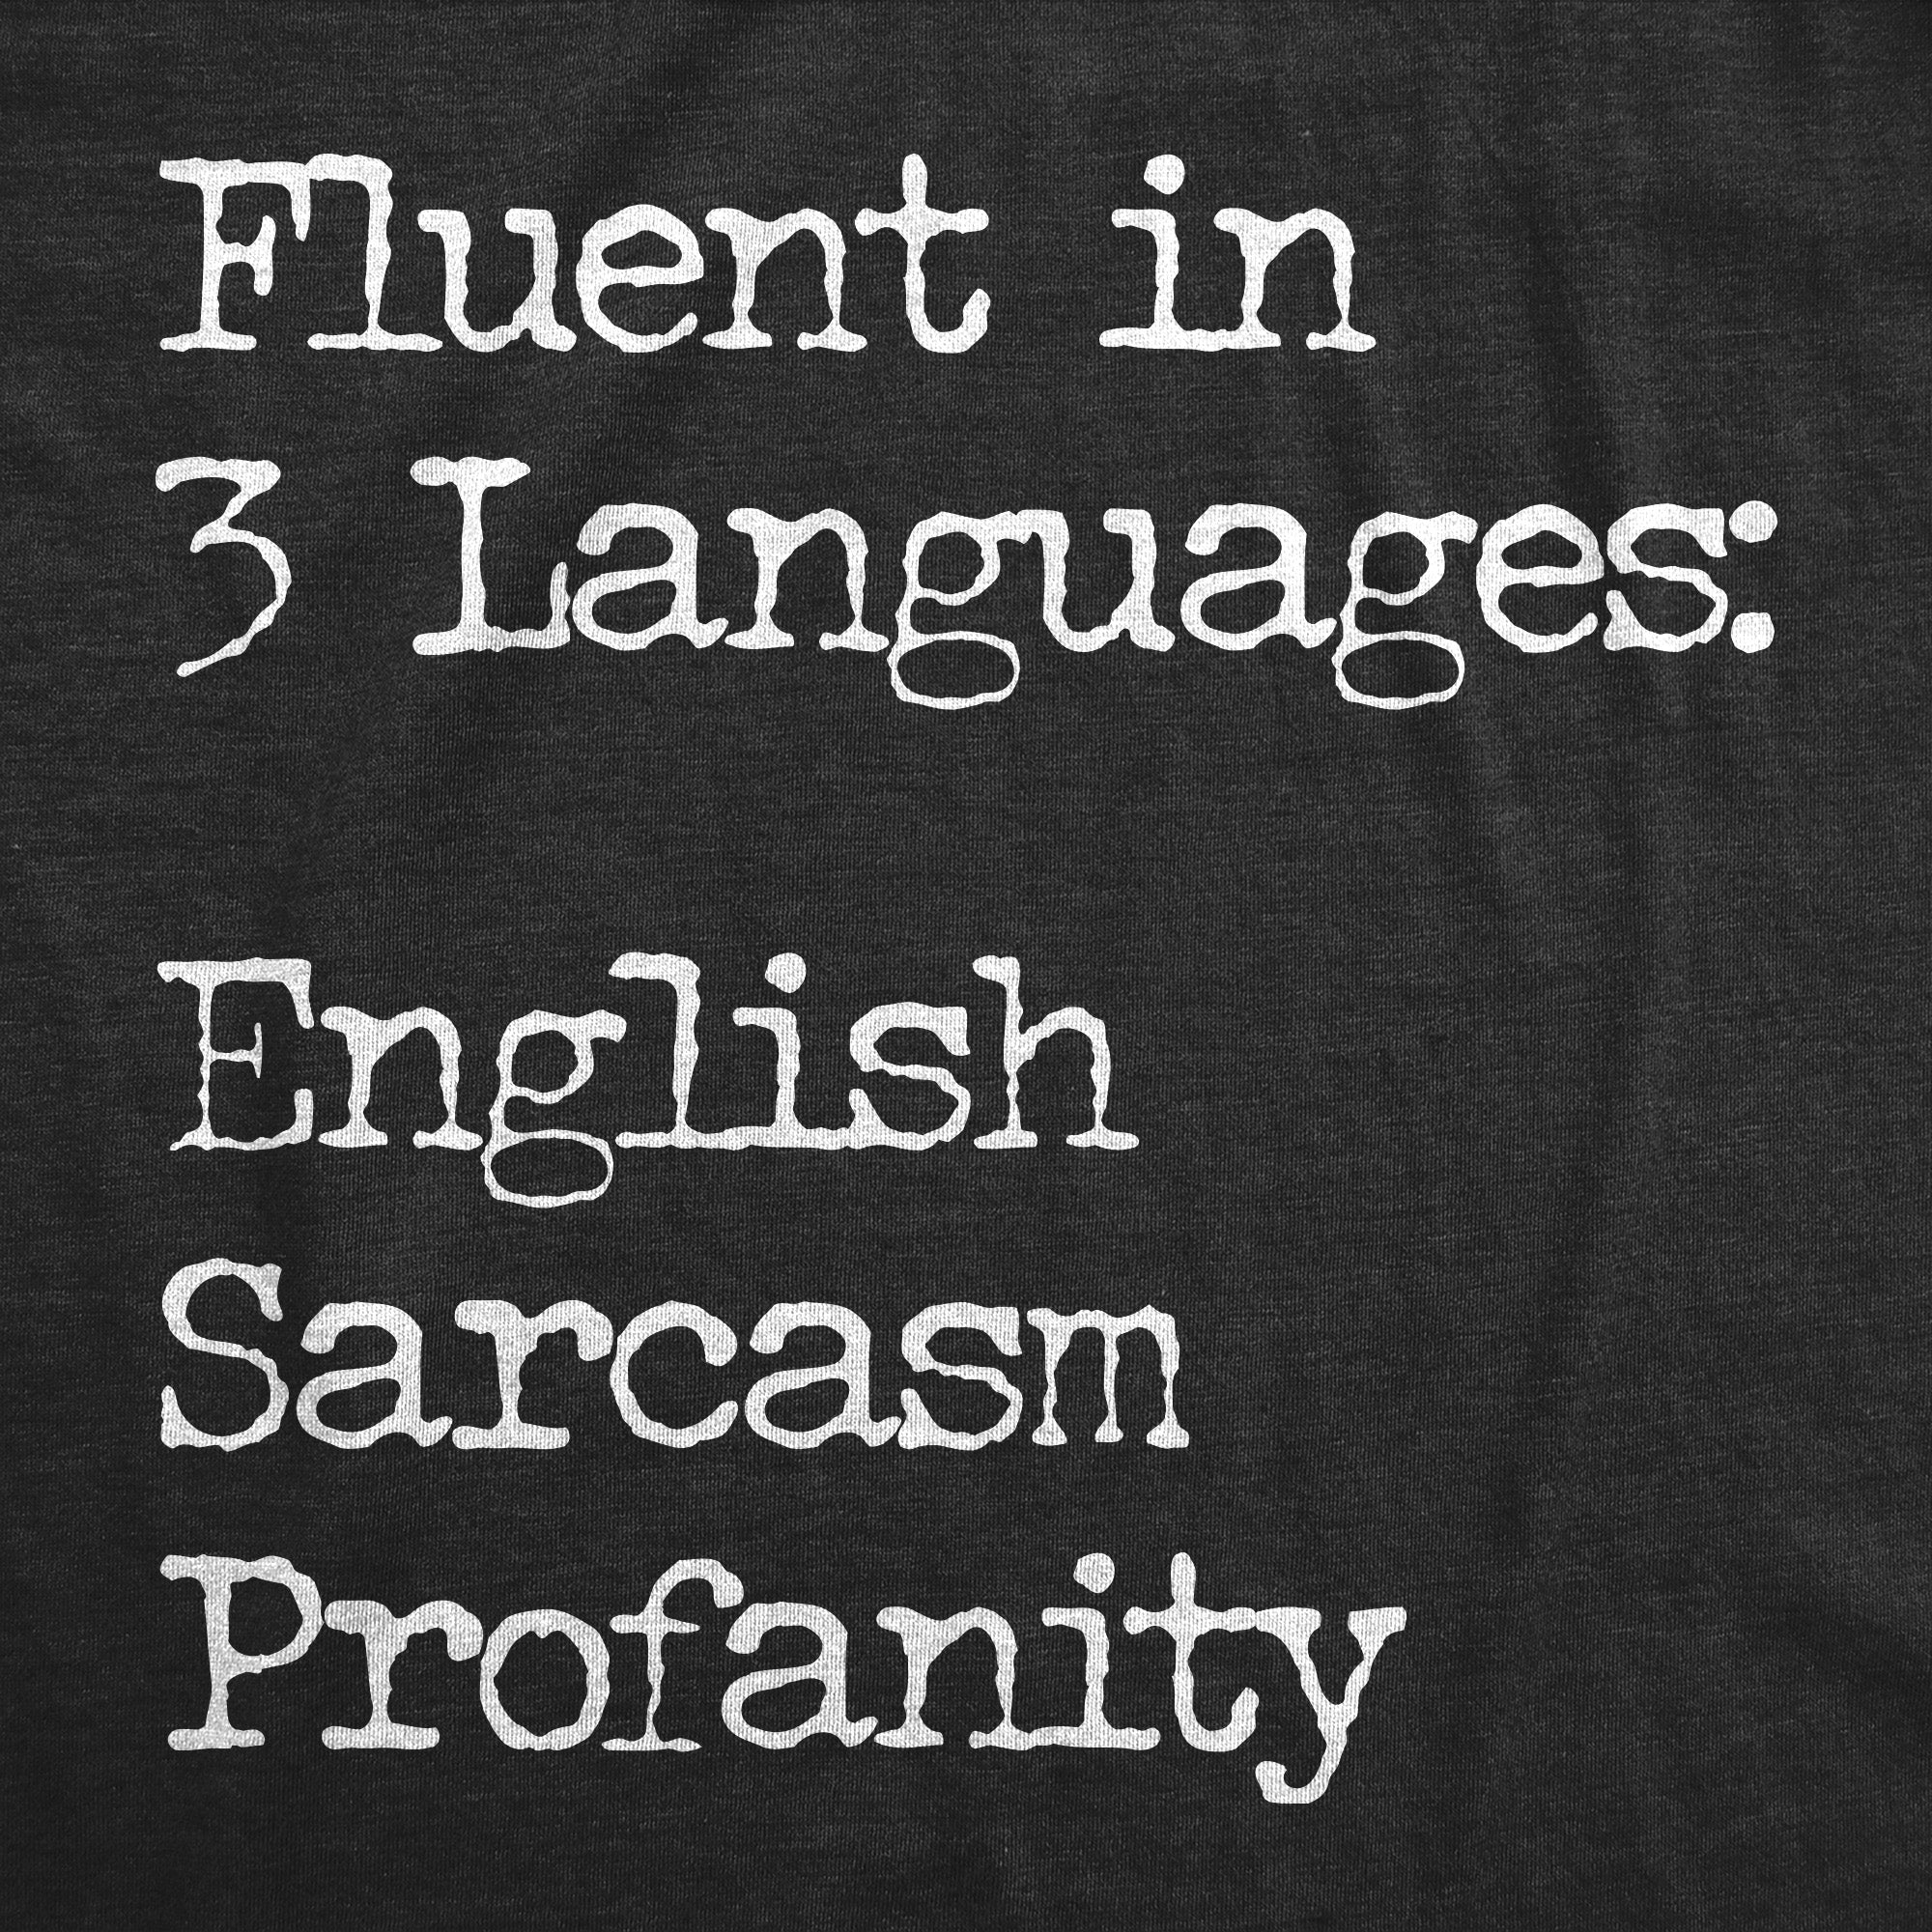 Funny Heather Black - LANGUAGES Fluent In Three Languages English Sarcasm Profanity Womens T Shirt Nerdy Sarcastic Tee